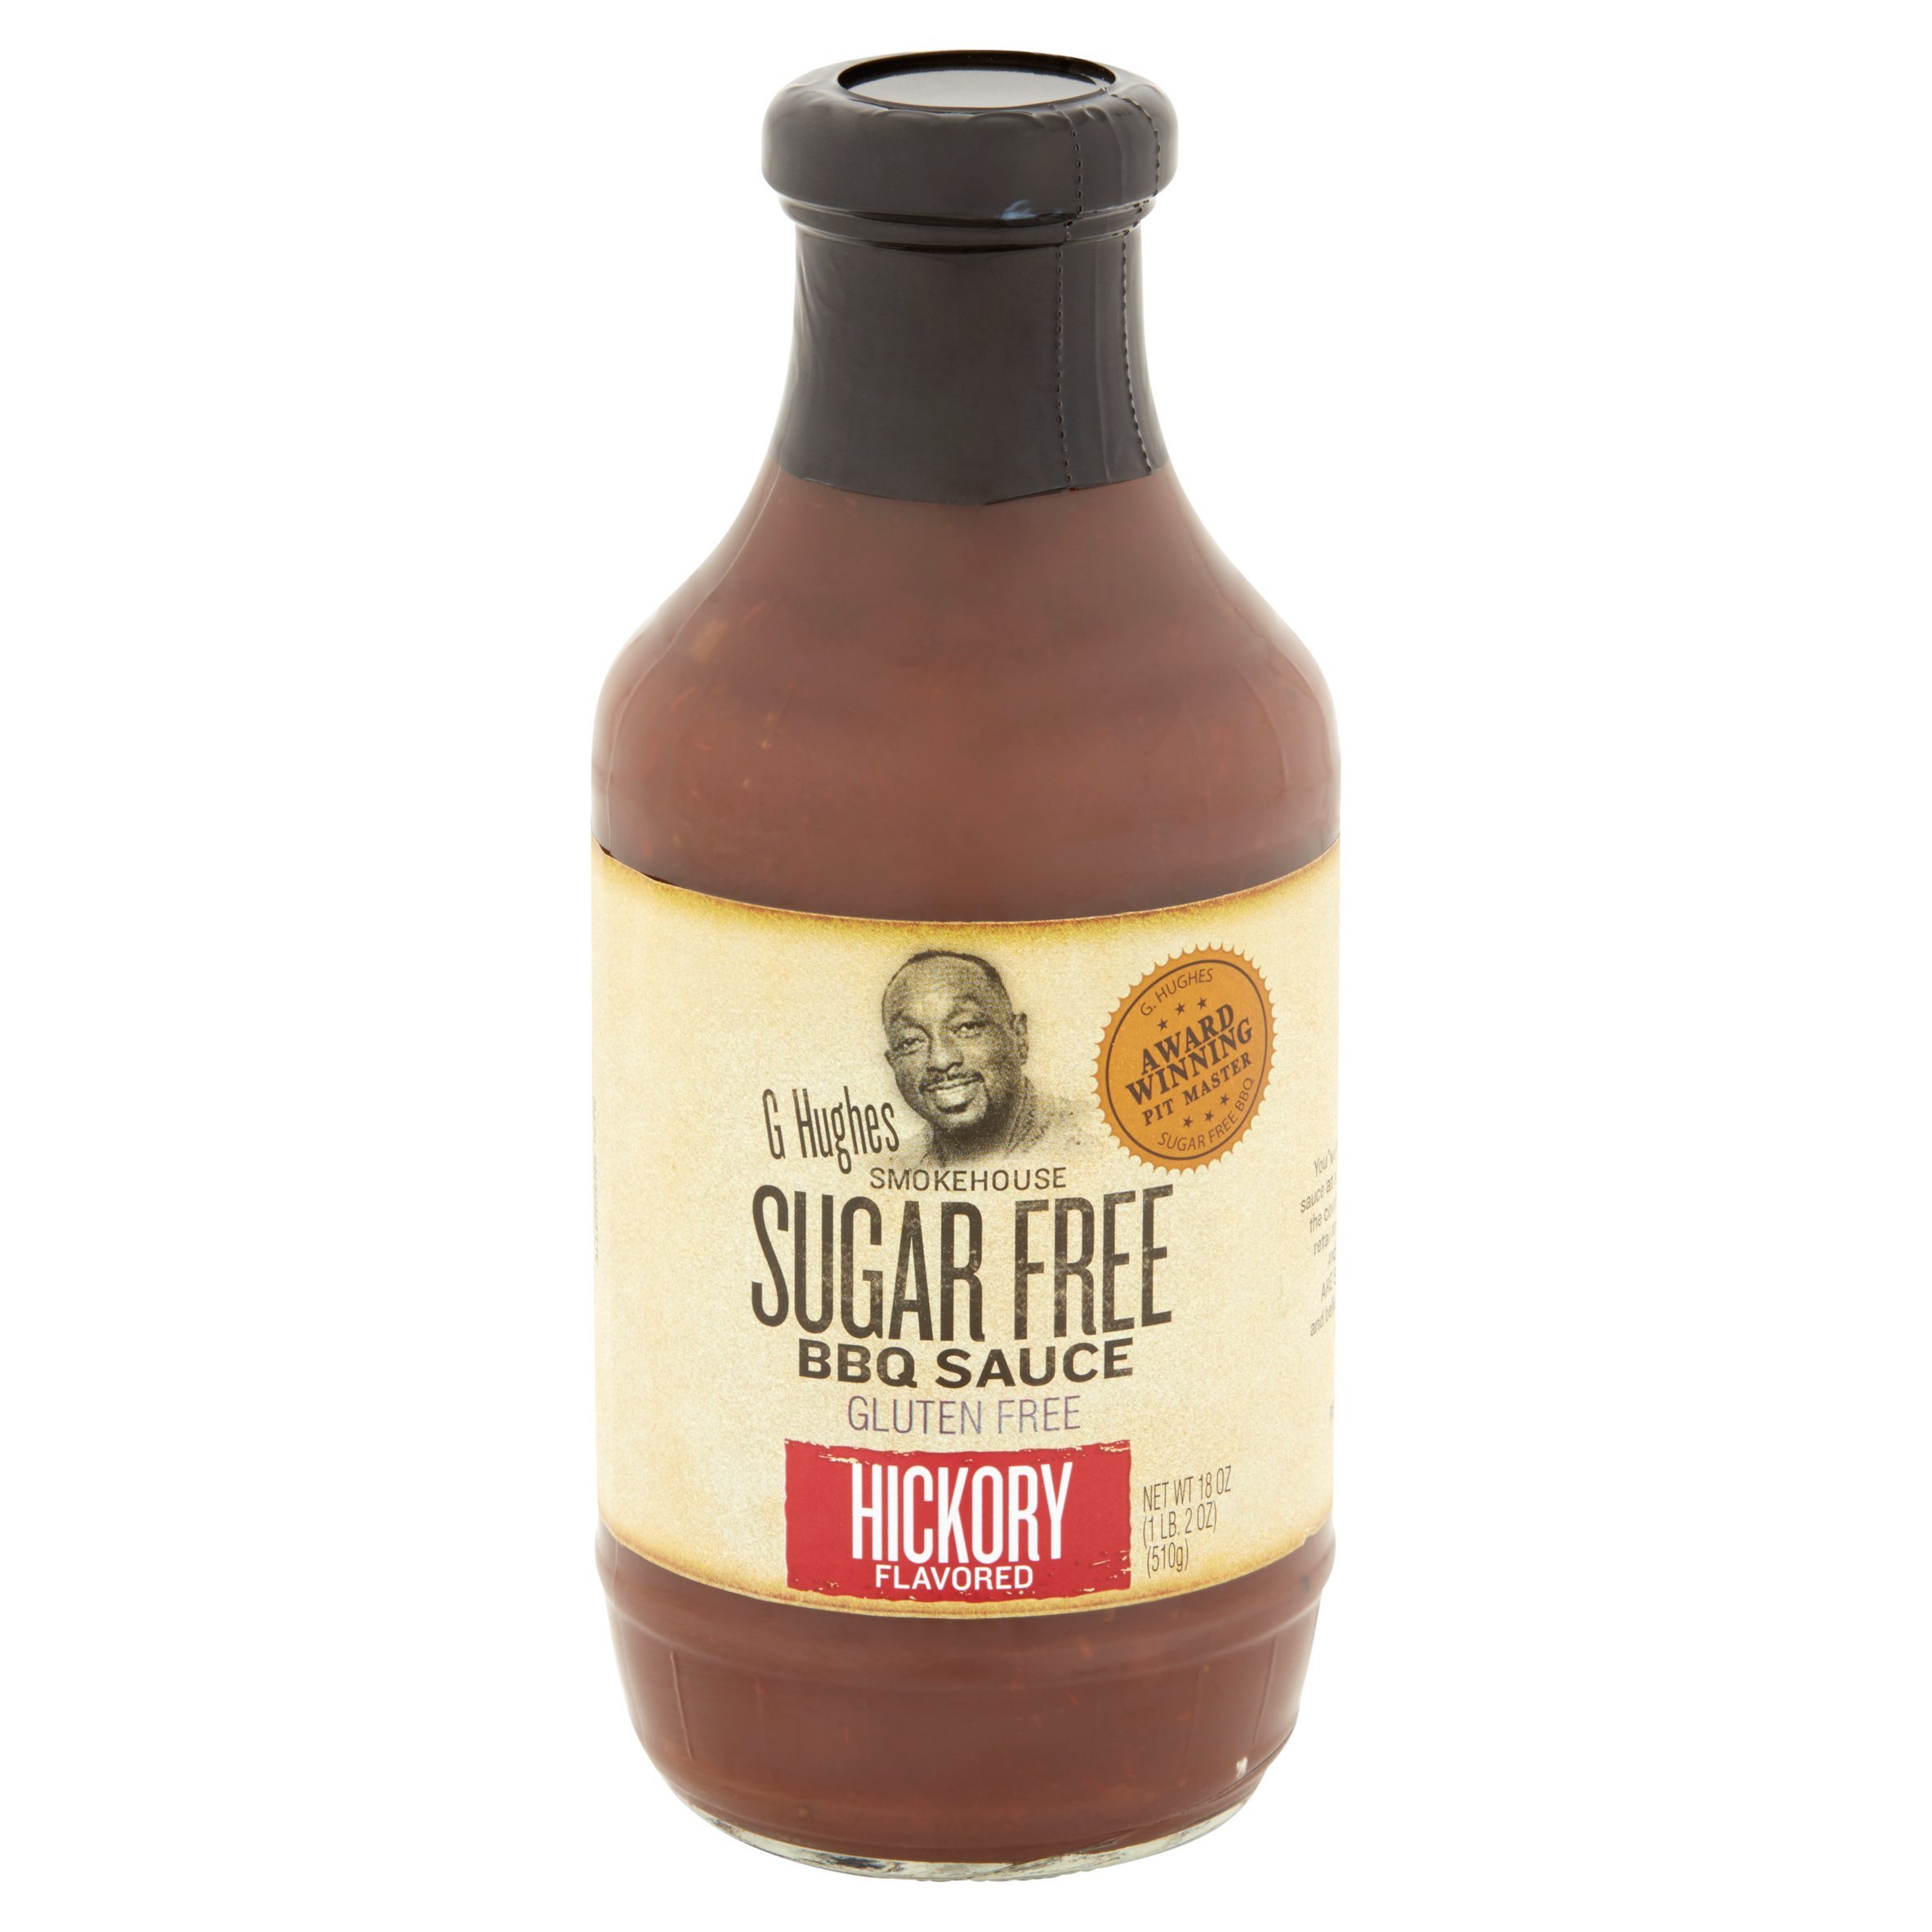 Top 22 G Hughes Smokehouse Sugar Free Bbq Sauce